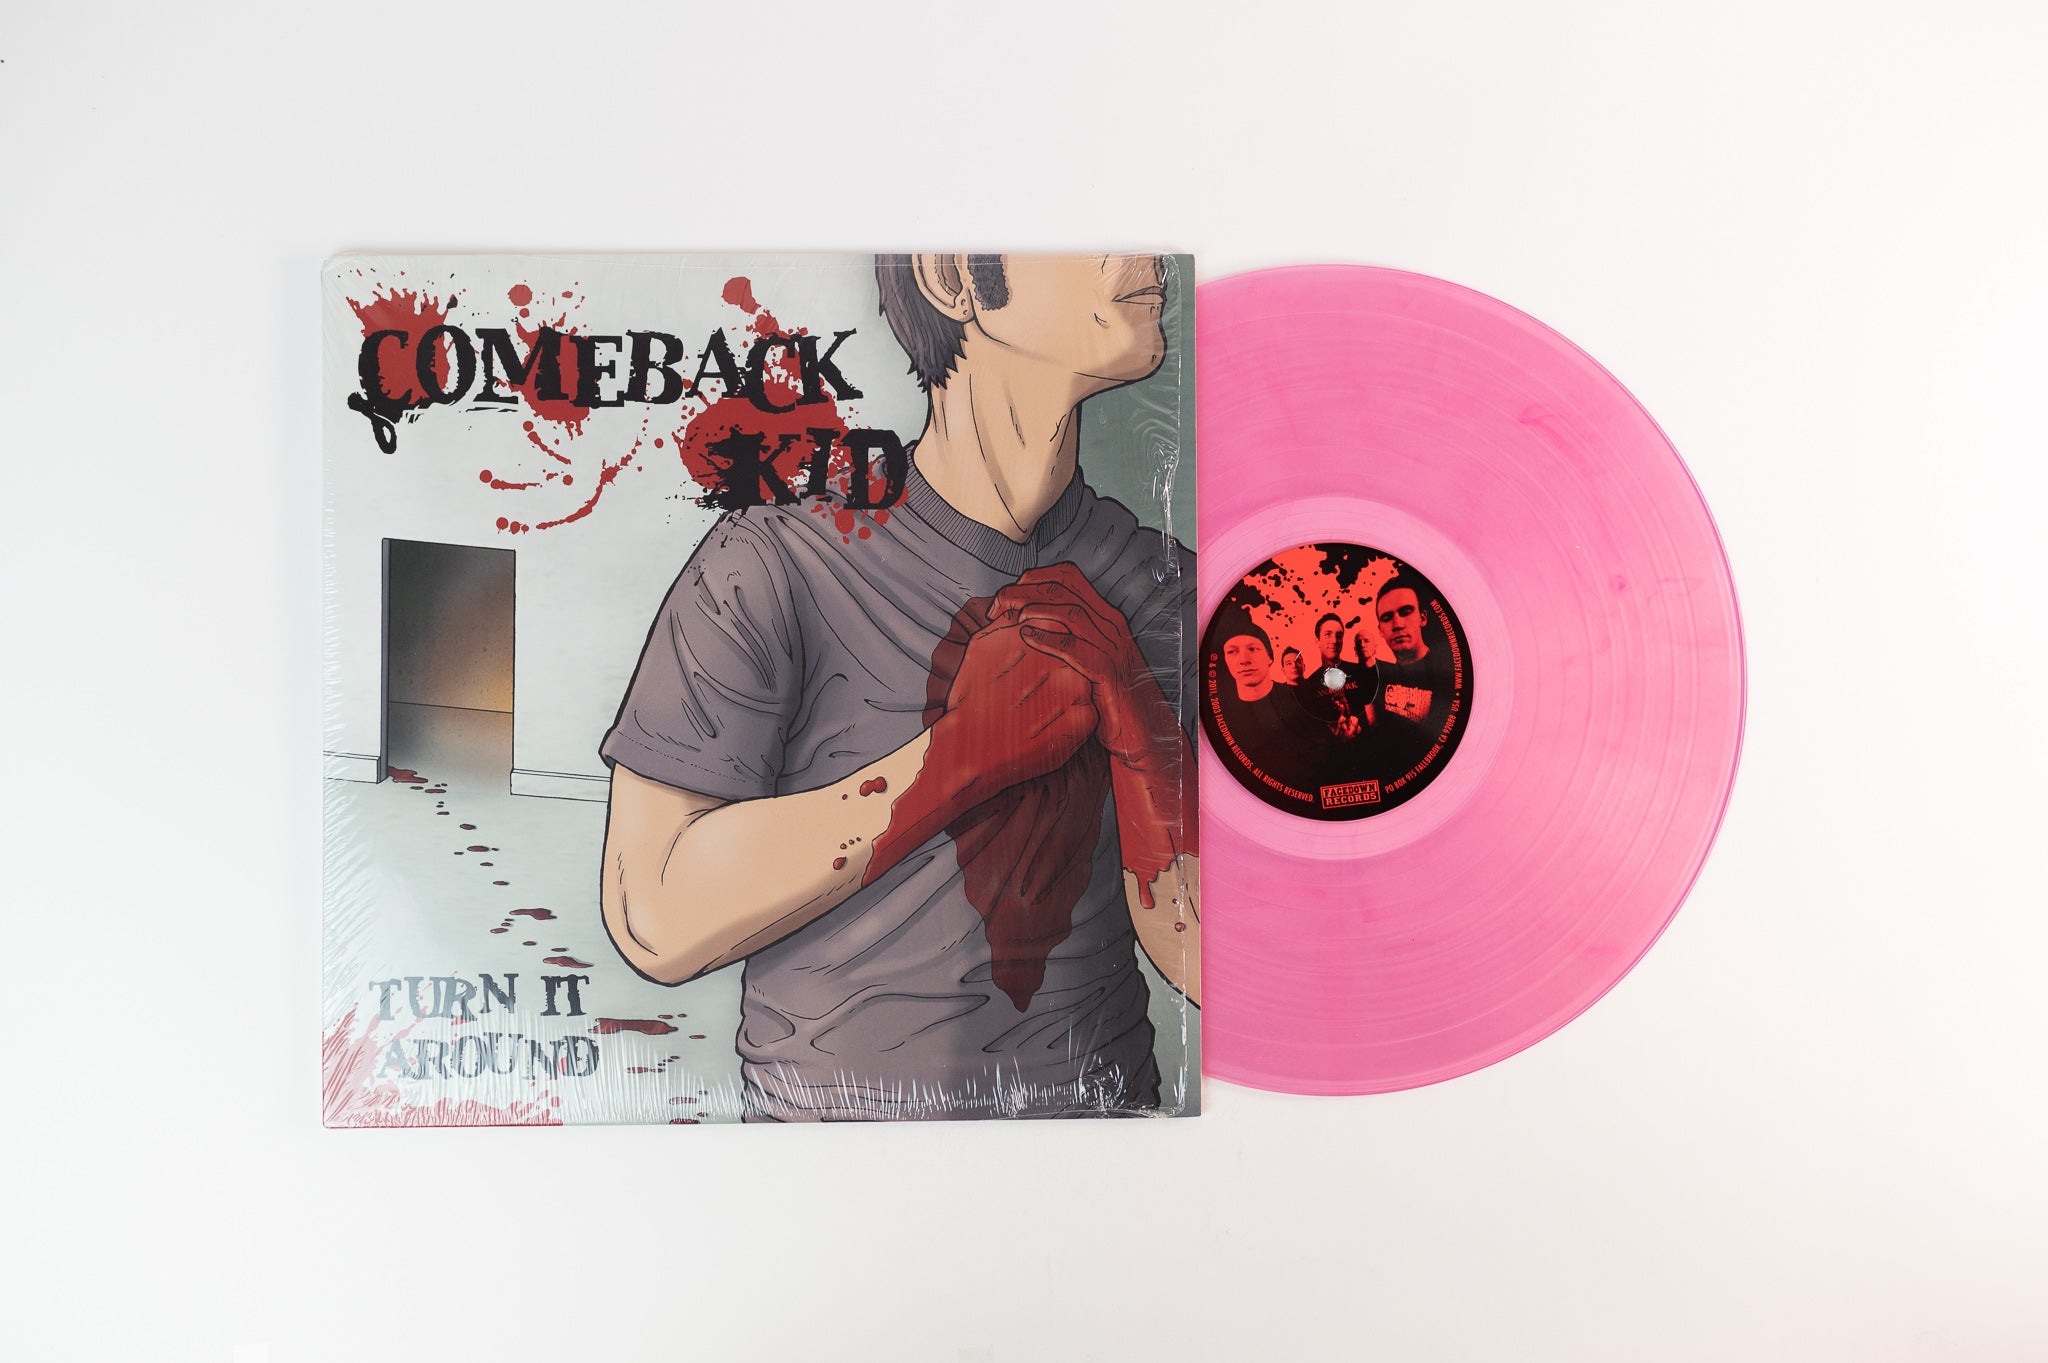 Comeback Kid - Turn It Around on Facedown Records - Pink Vinyl